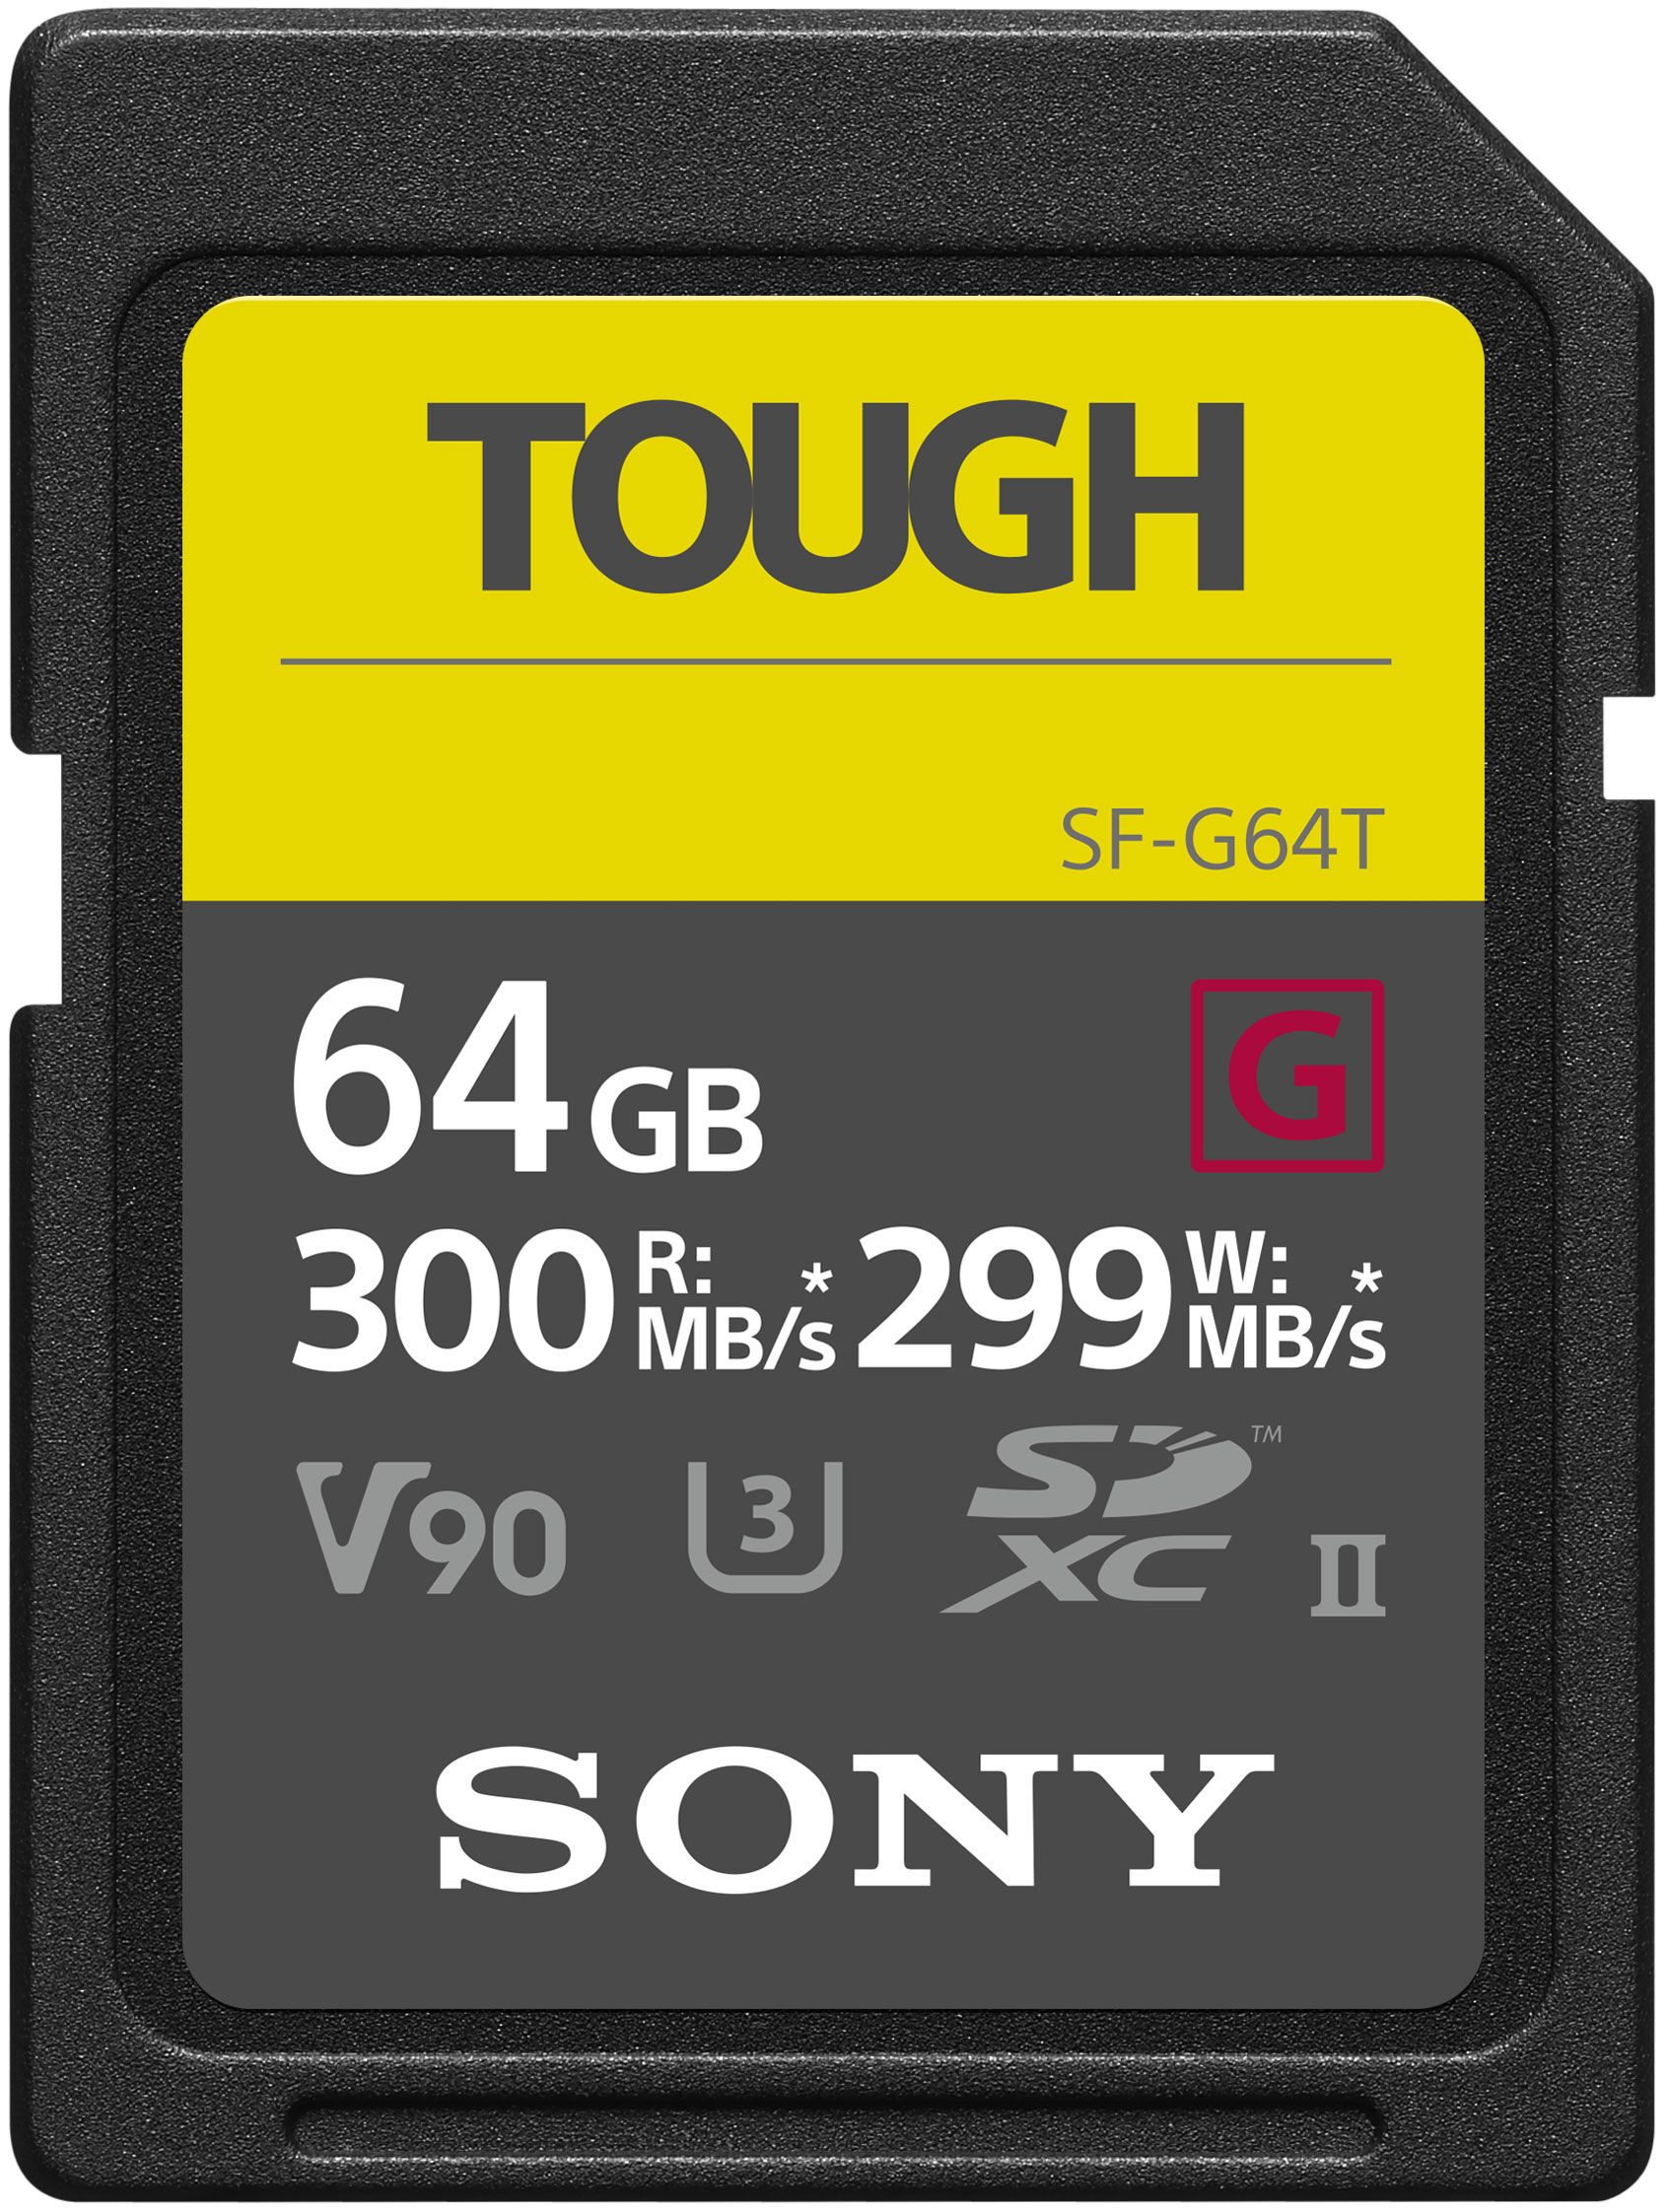 Sony Carte SD SF-G Tough UHS-II 64GB 300MB/s